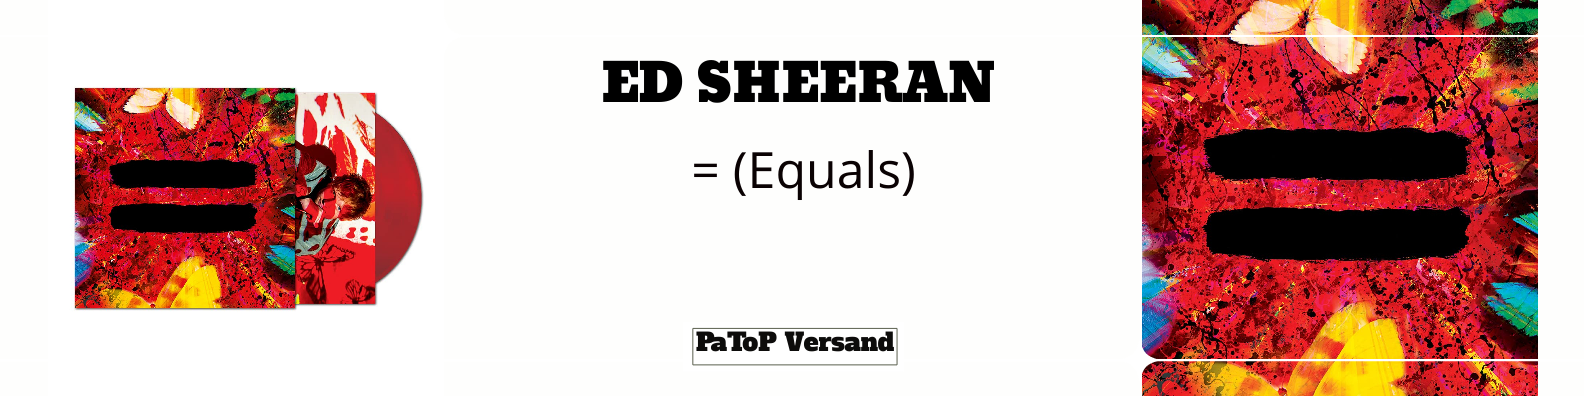 Ed Sheeran’s = (Equals): Eine Albumkritik